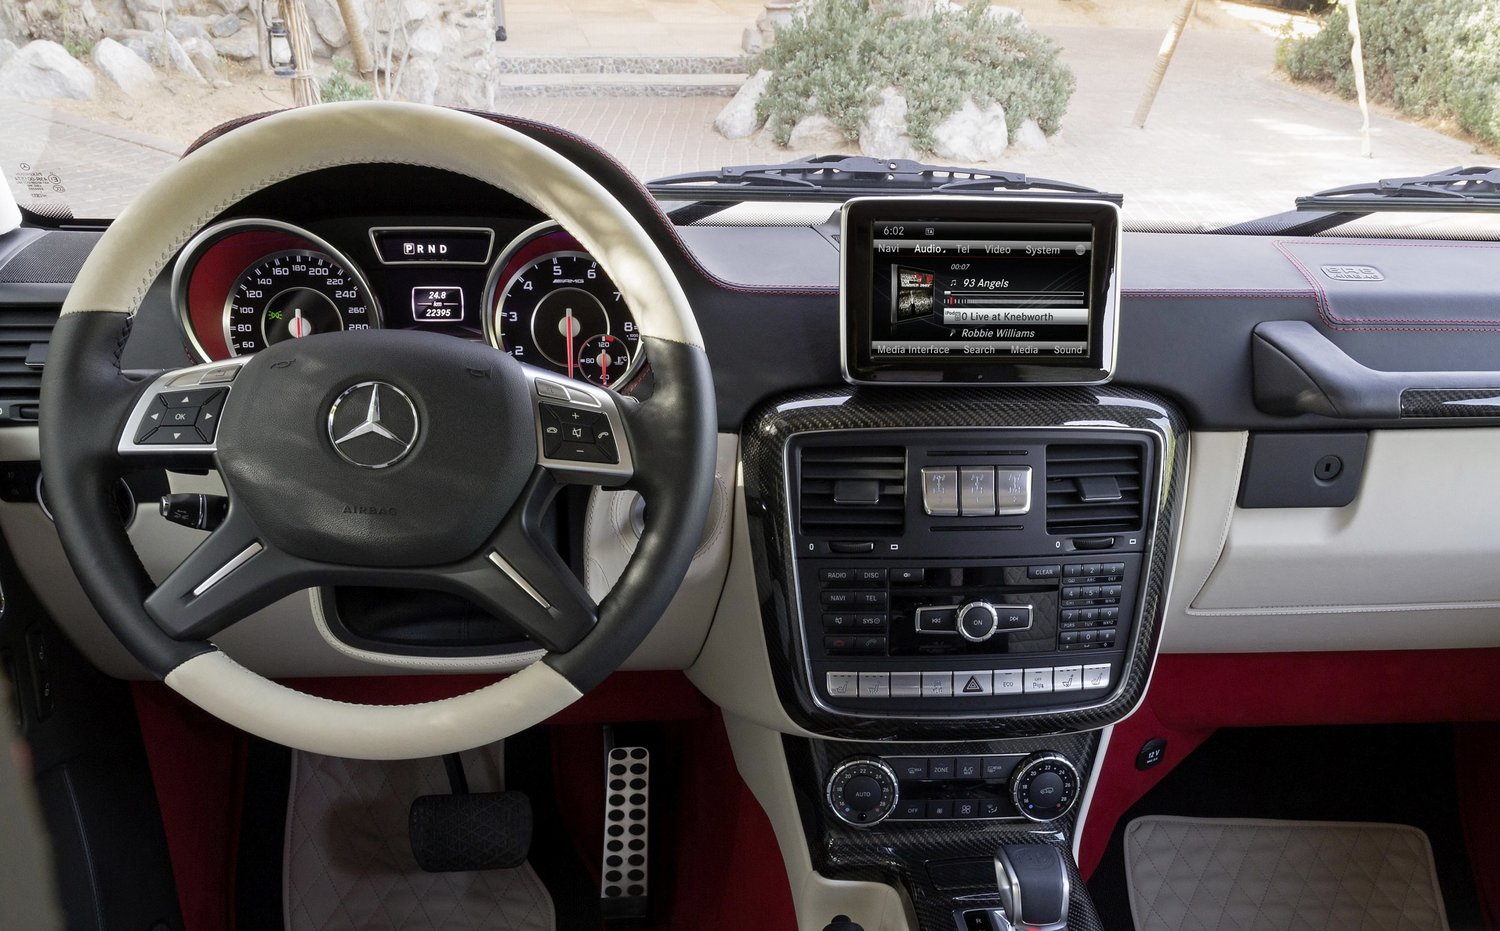 пикап Mercedes-Benz G-klasse AMG 6x6 2013 - 2016г выпуска модификация G63 AMG 6x6 5.5 AT (544 л.с.) 4×4